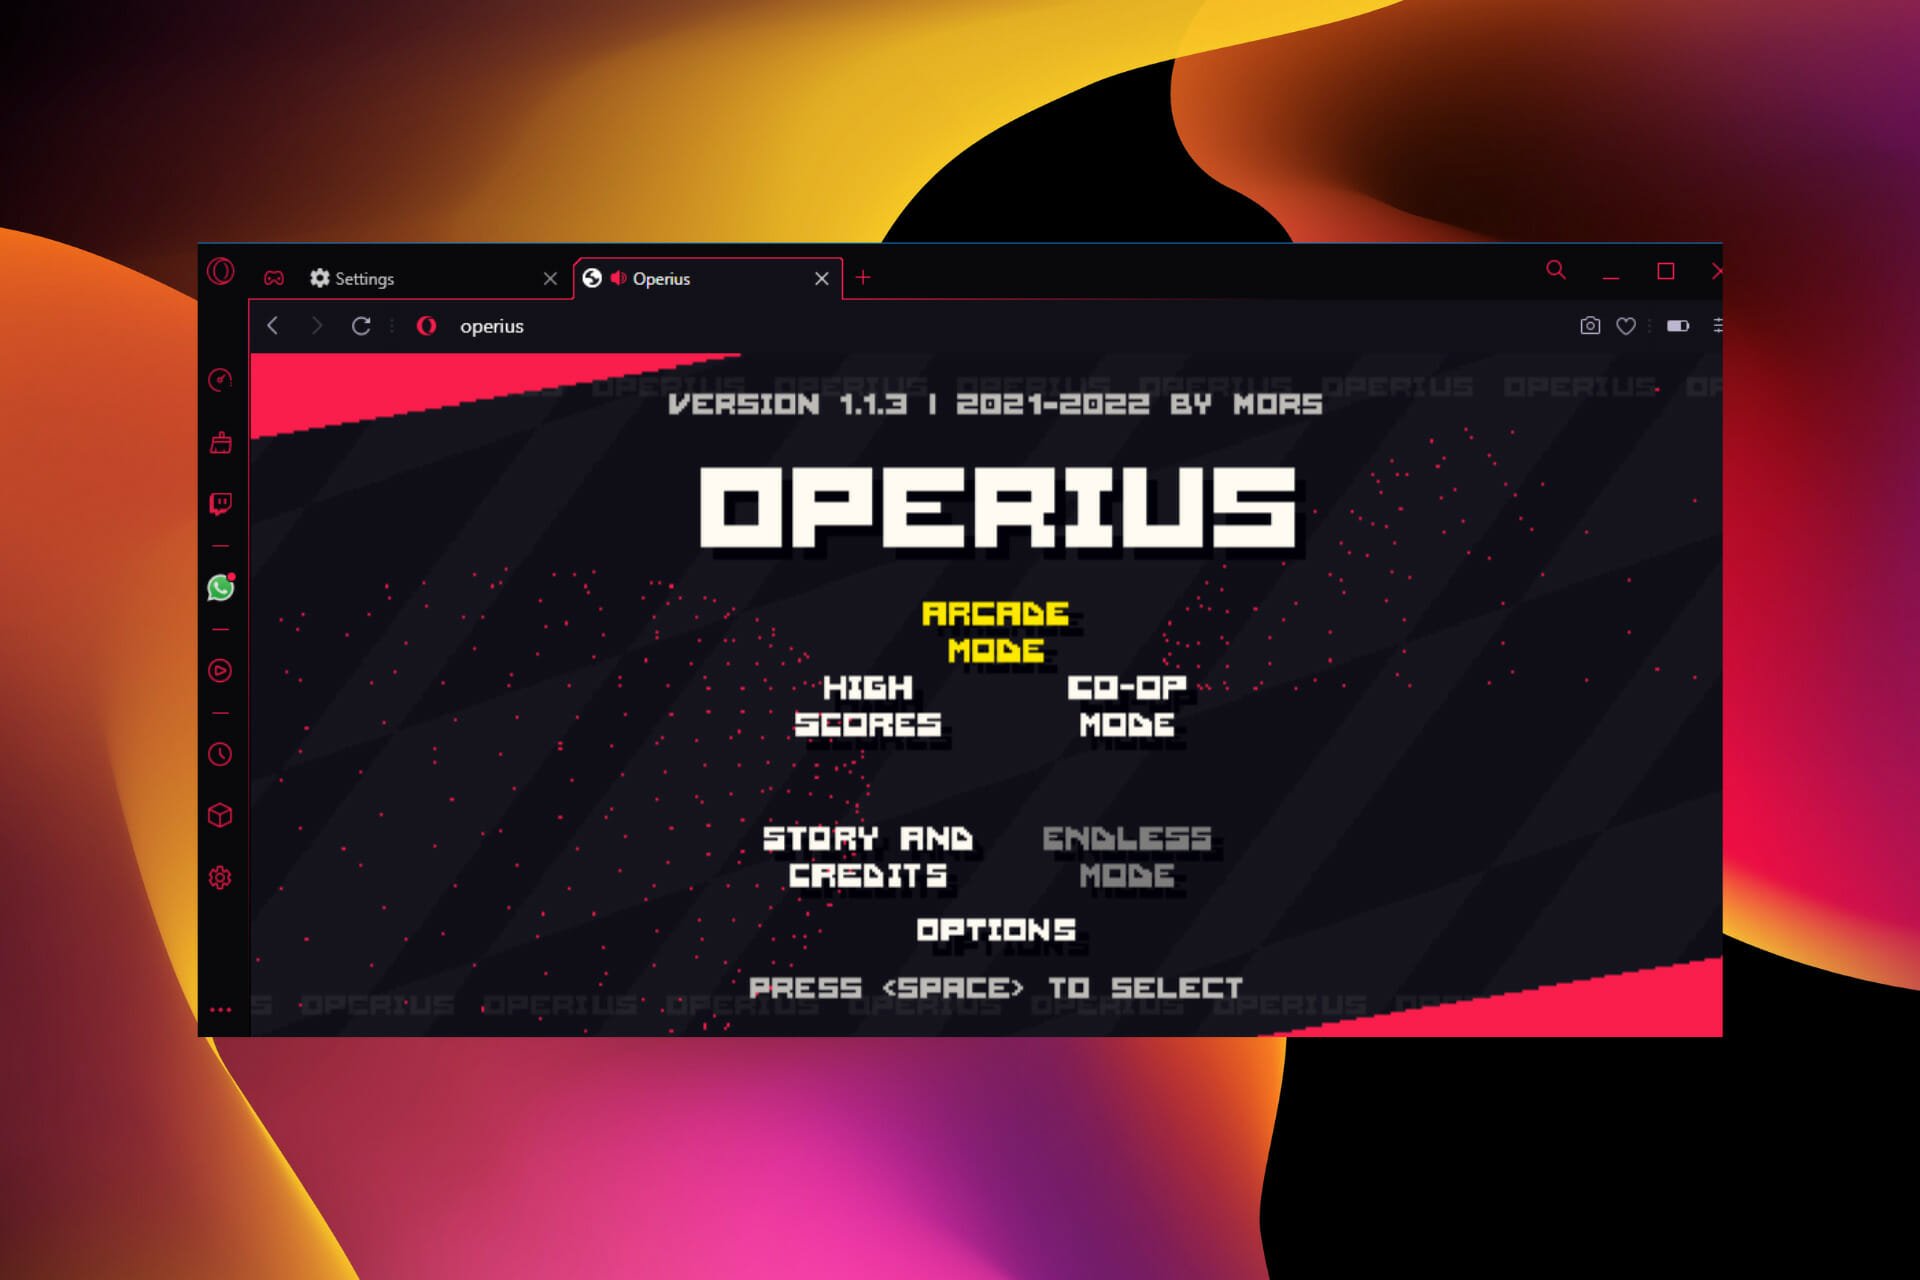 opera gx offline game